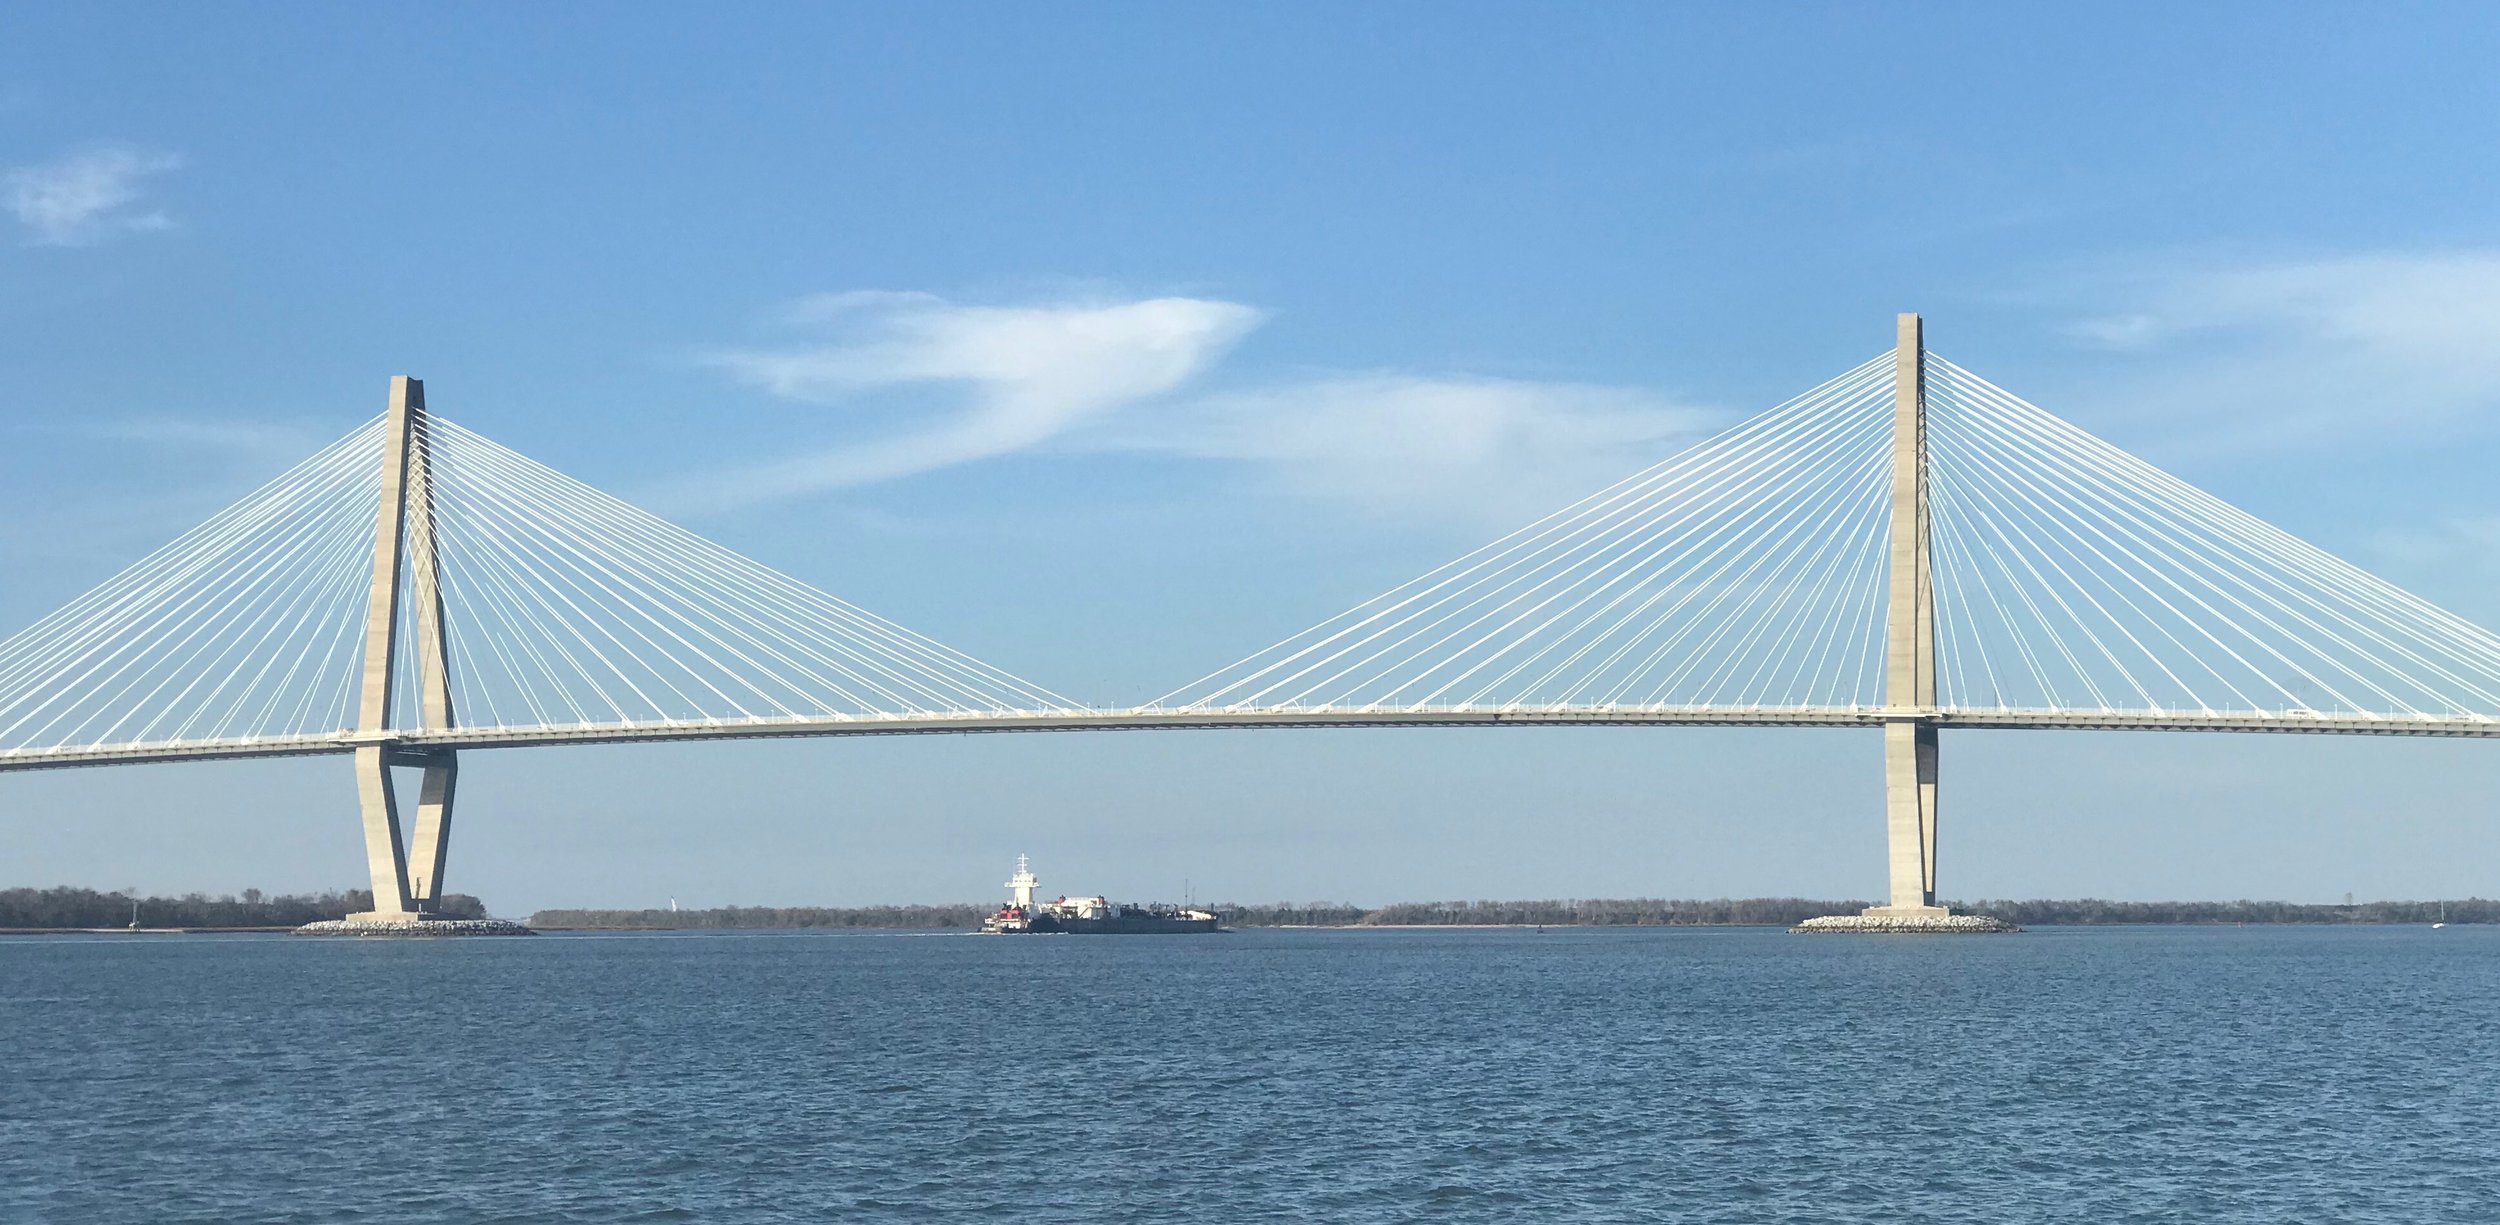  The Arthur Ravanel Jr. Bridge 